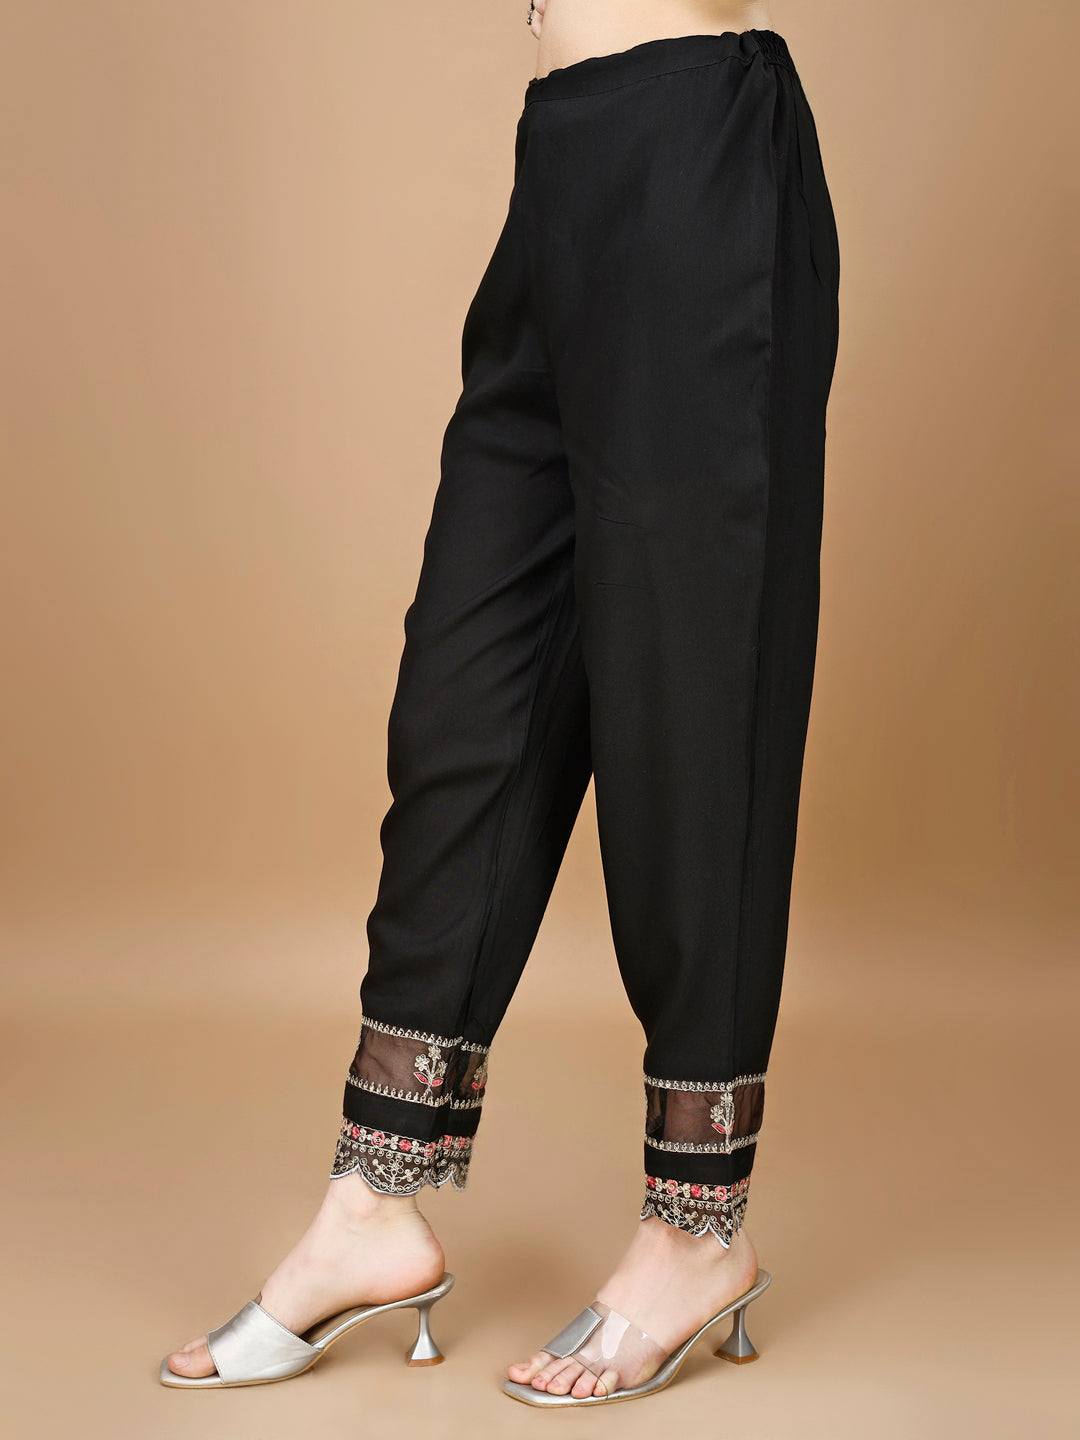 Floral Printed & Embroidered Anarkali Kurta with Embroidered Pant & dupatta Premium Luxury